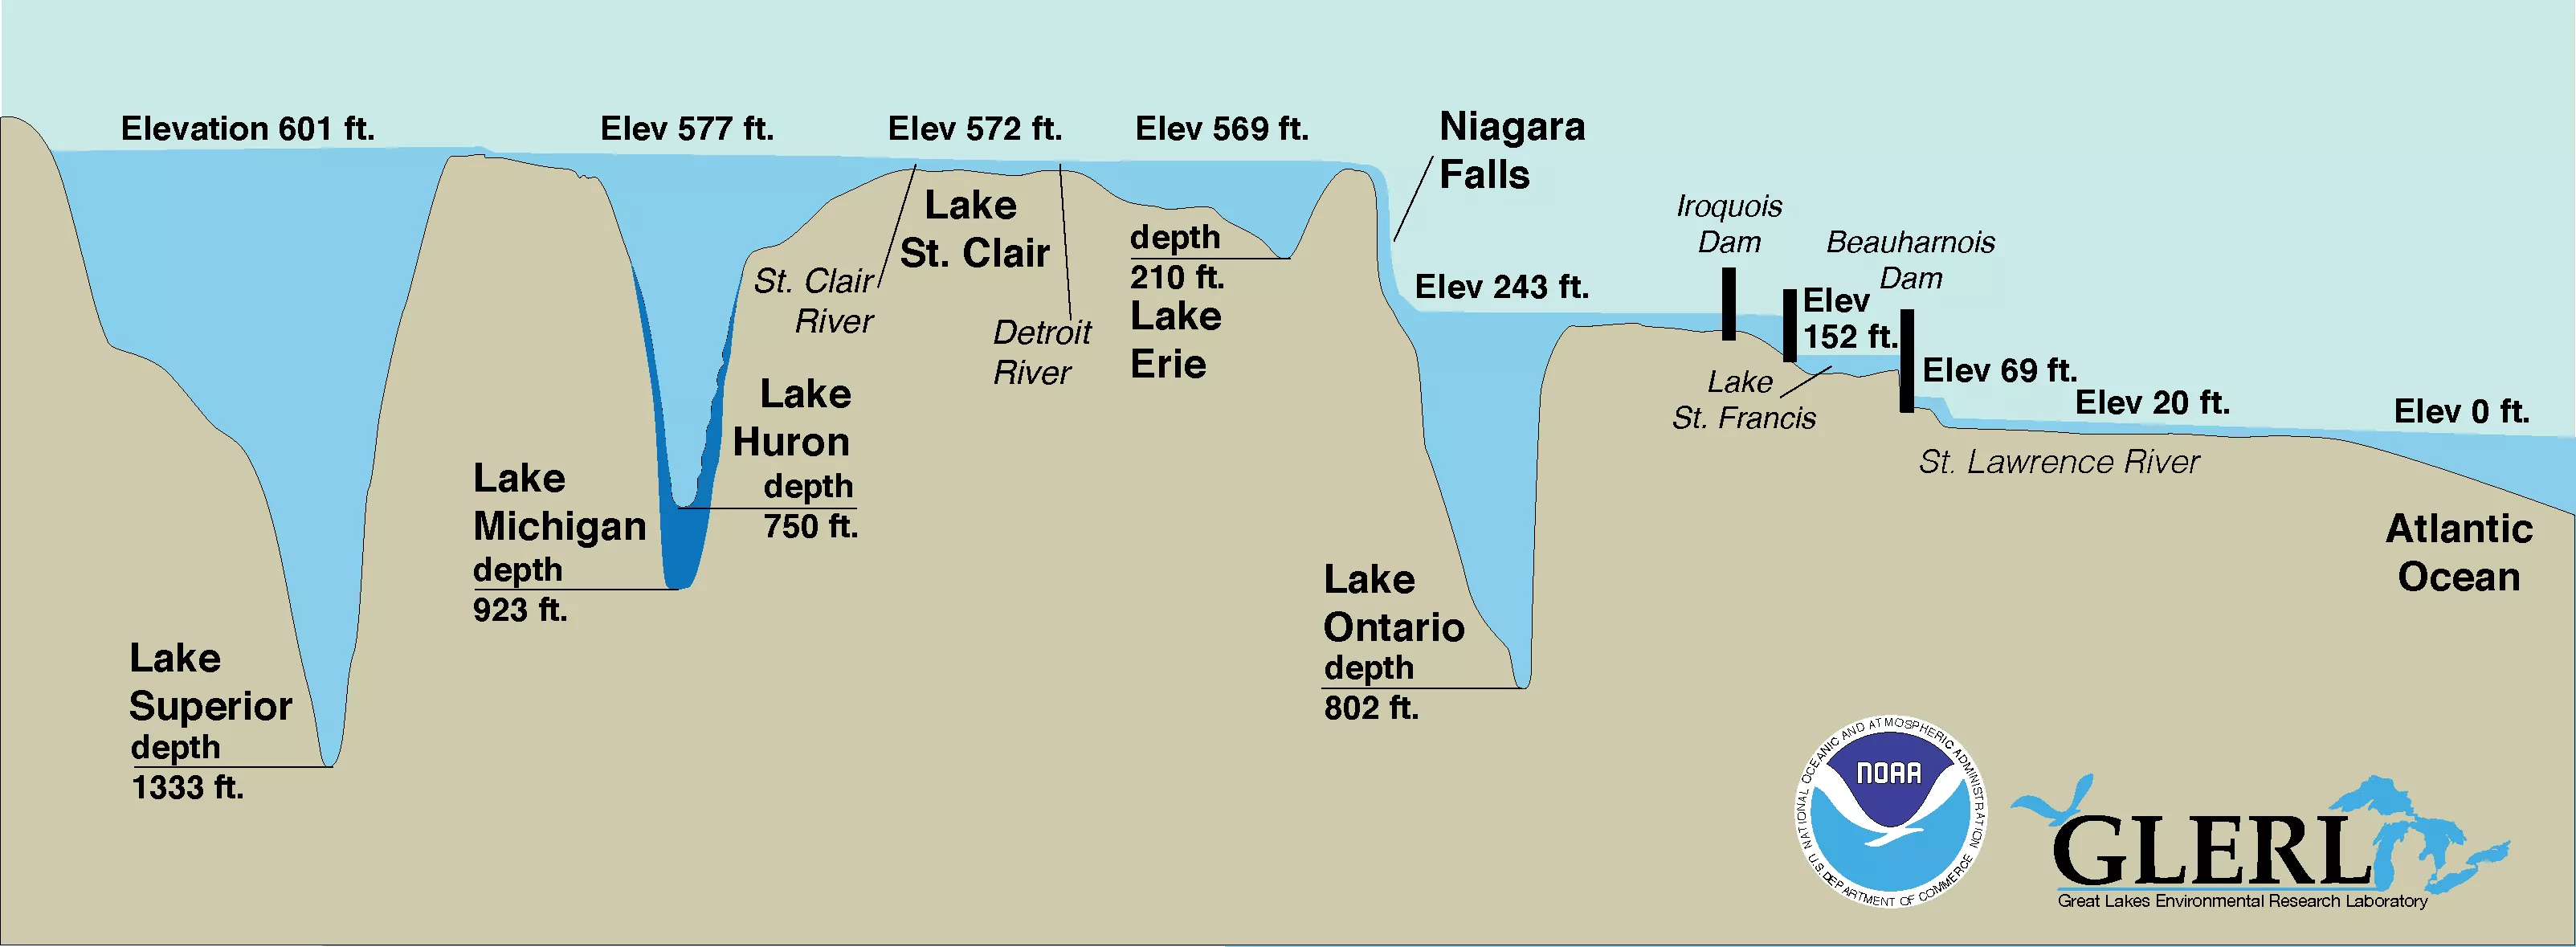 Infographic of great lakes depth- Lake Ontario is 802 feet, Lake Michigan is 923 feet, Lake Superior is 1333 feet, Lake Huron is 750 feet deep.